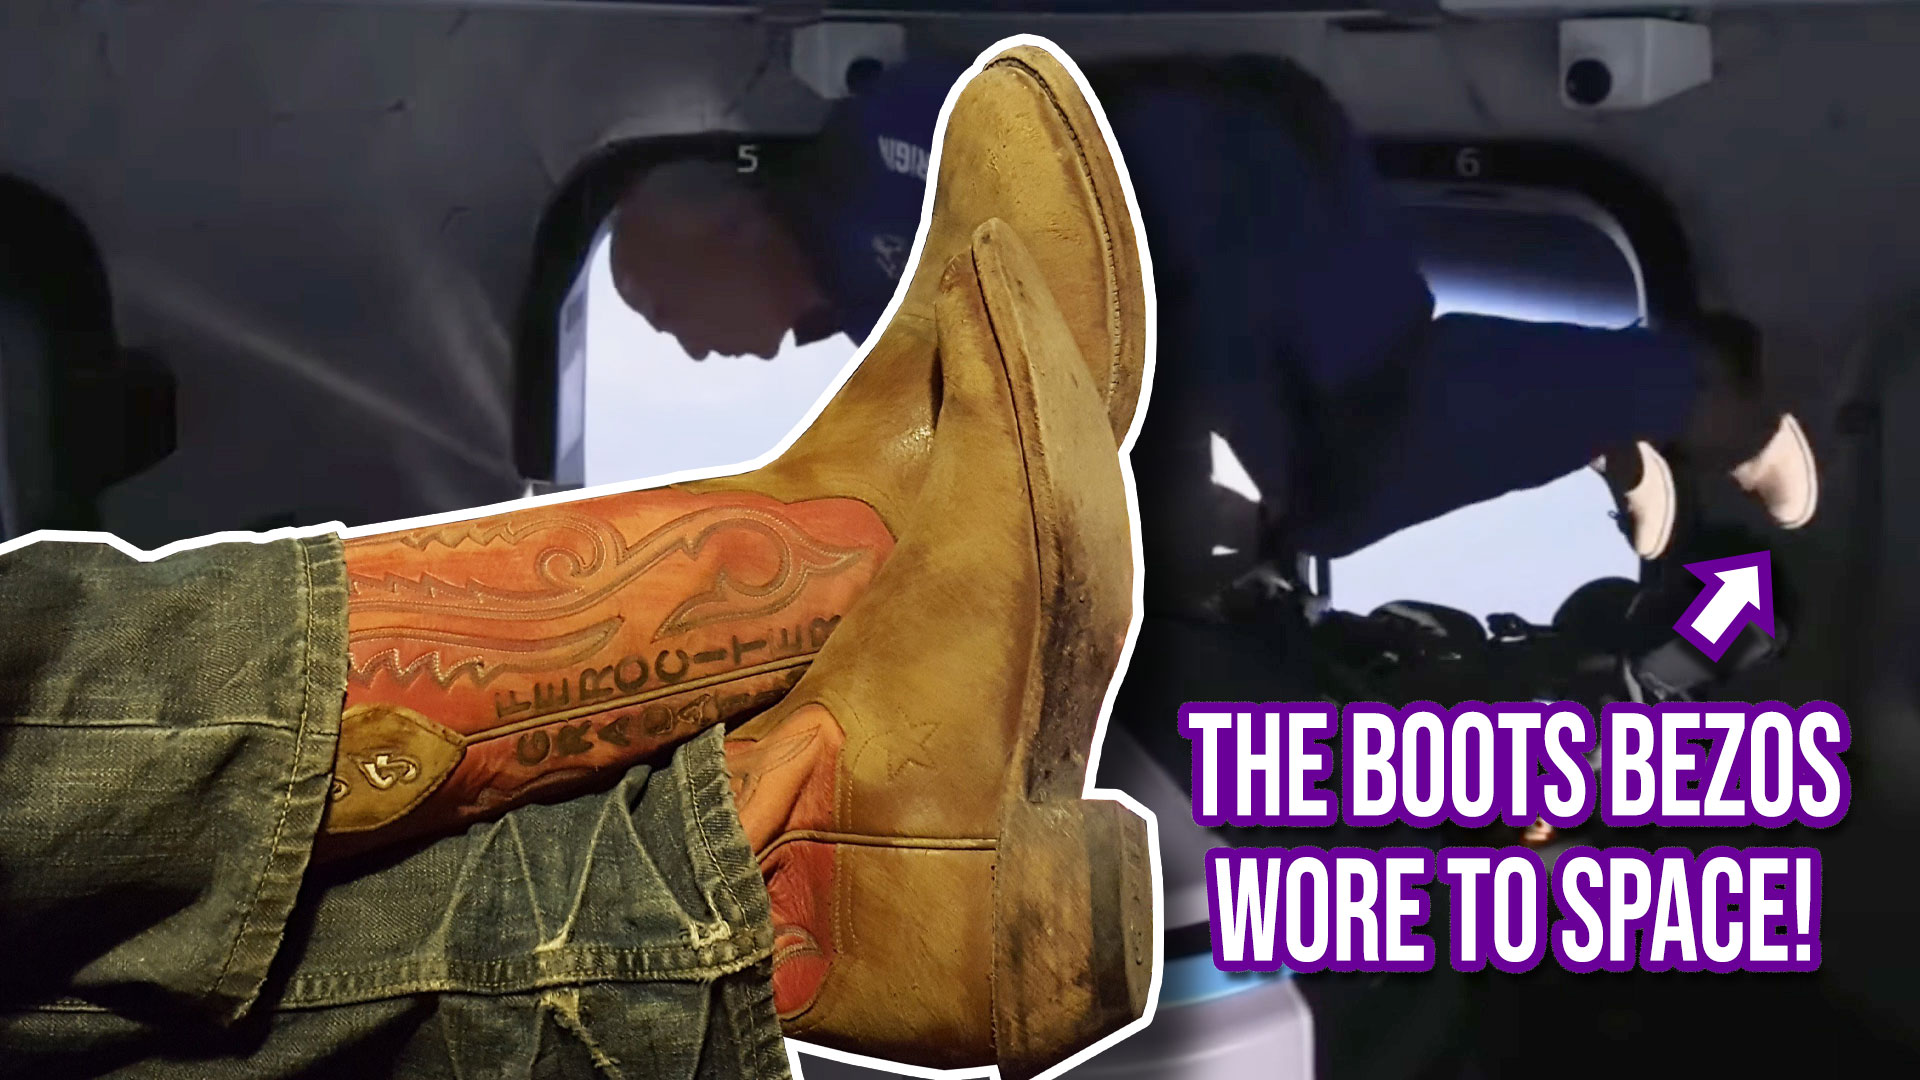 Jeff Bezos Cowboy boots